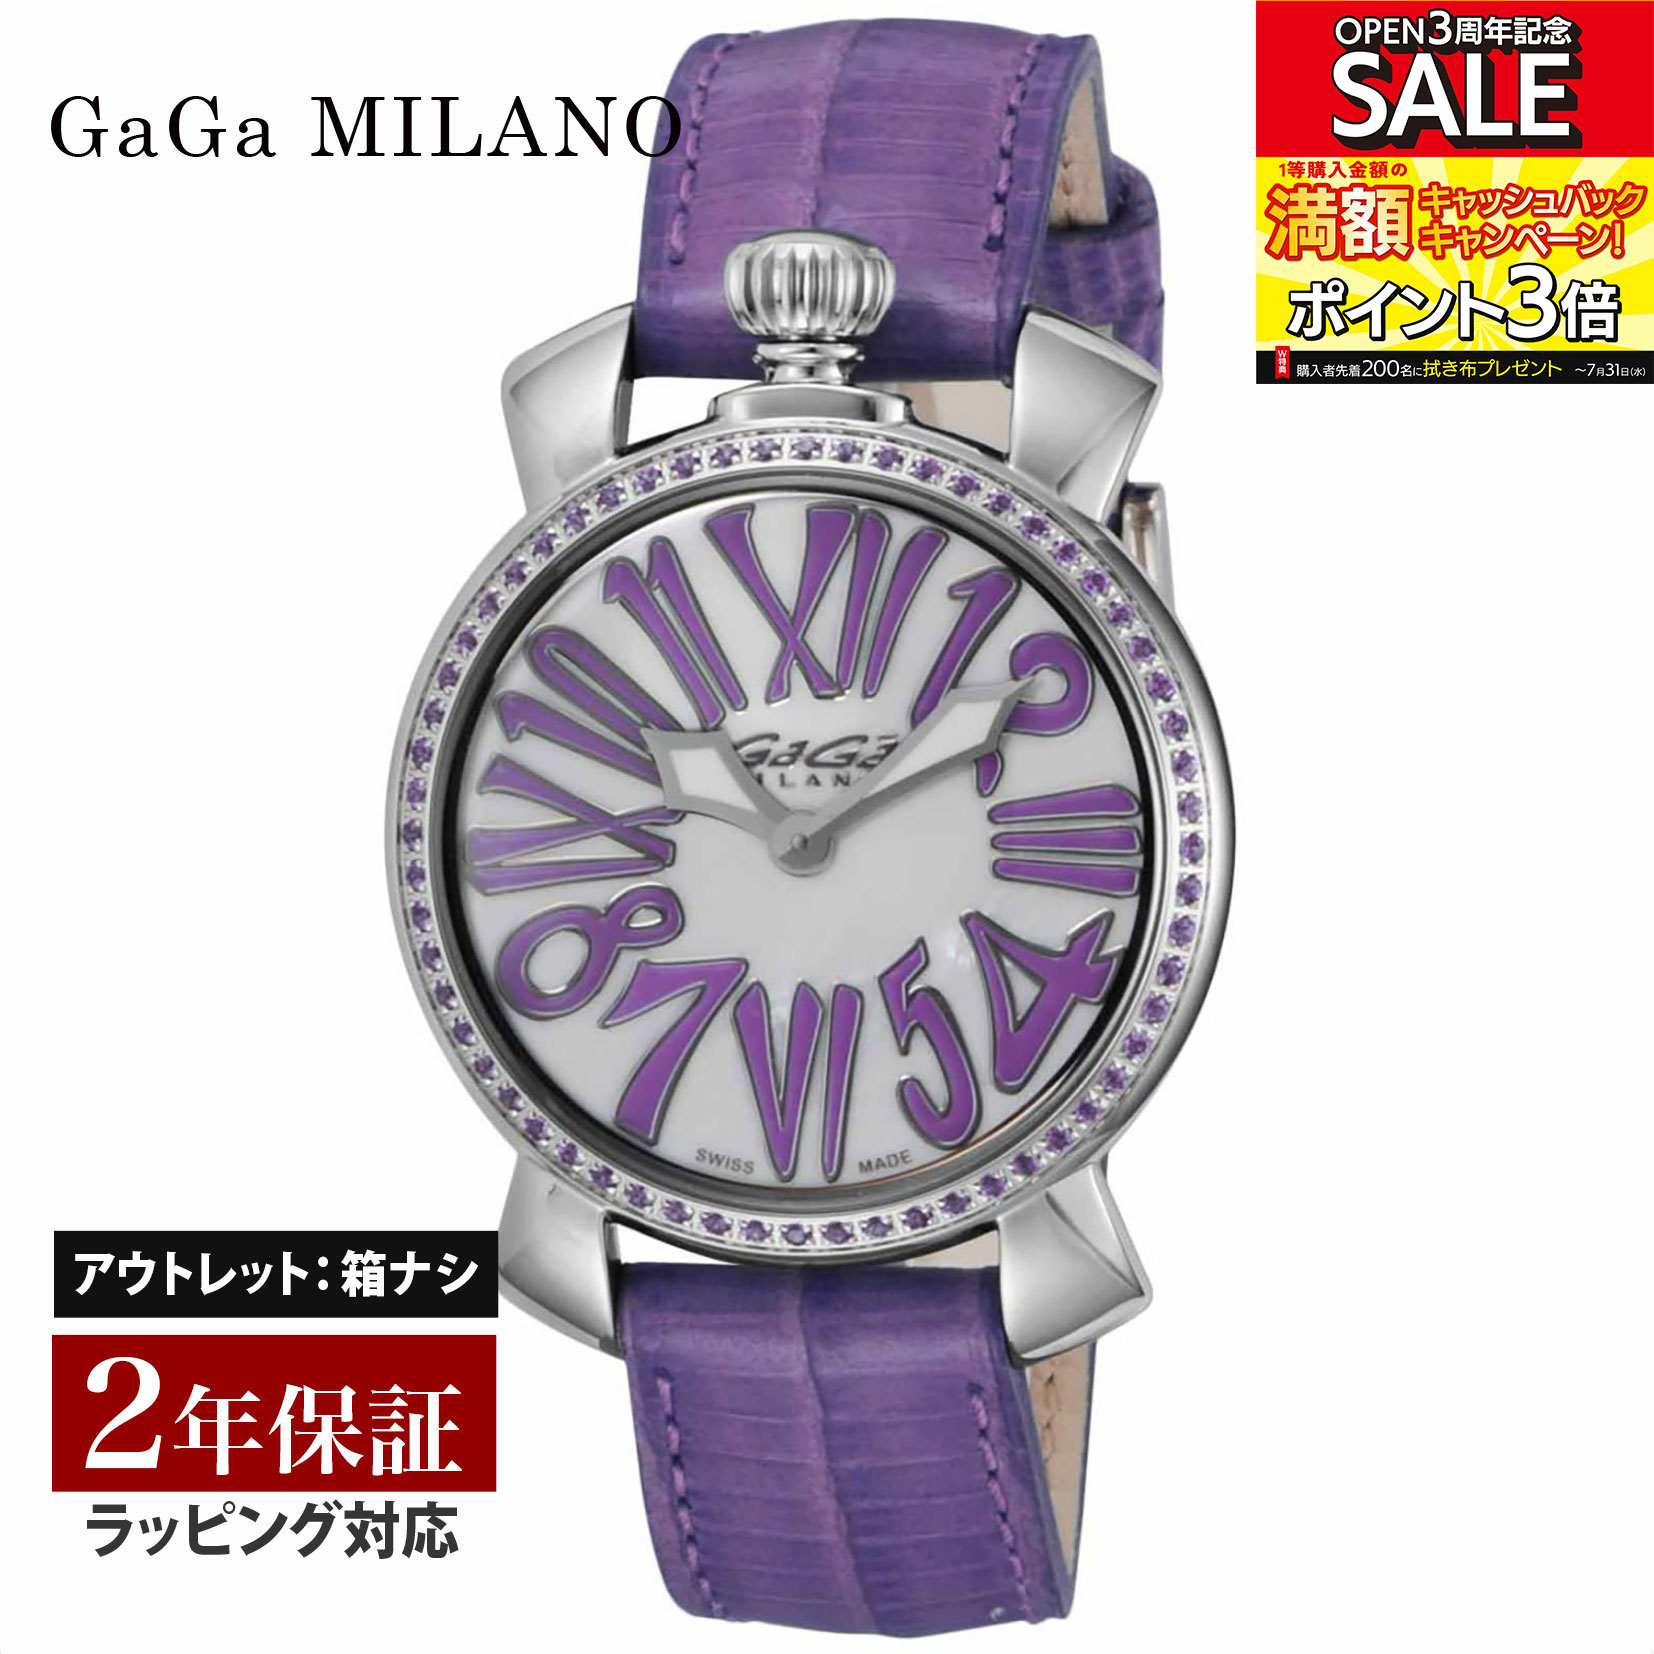 【OUTLET】 ガガミラノ GaGaMILANO メンズ レディース 時計 MANUALE THIN 35mm STONES クォーツ ユニセックス ホワイト 6025.01 時計 腕時計 高級腕時計 ブランド 【展示品】